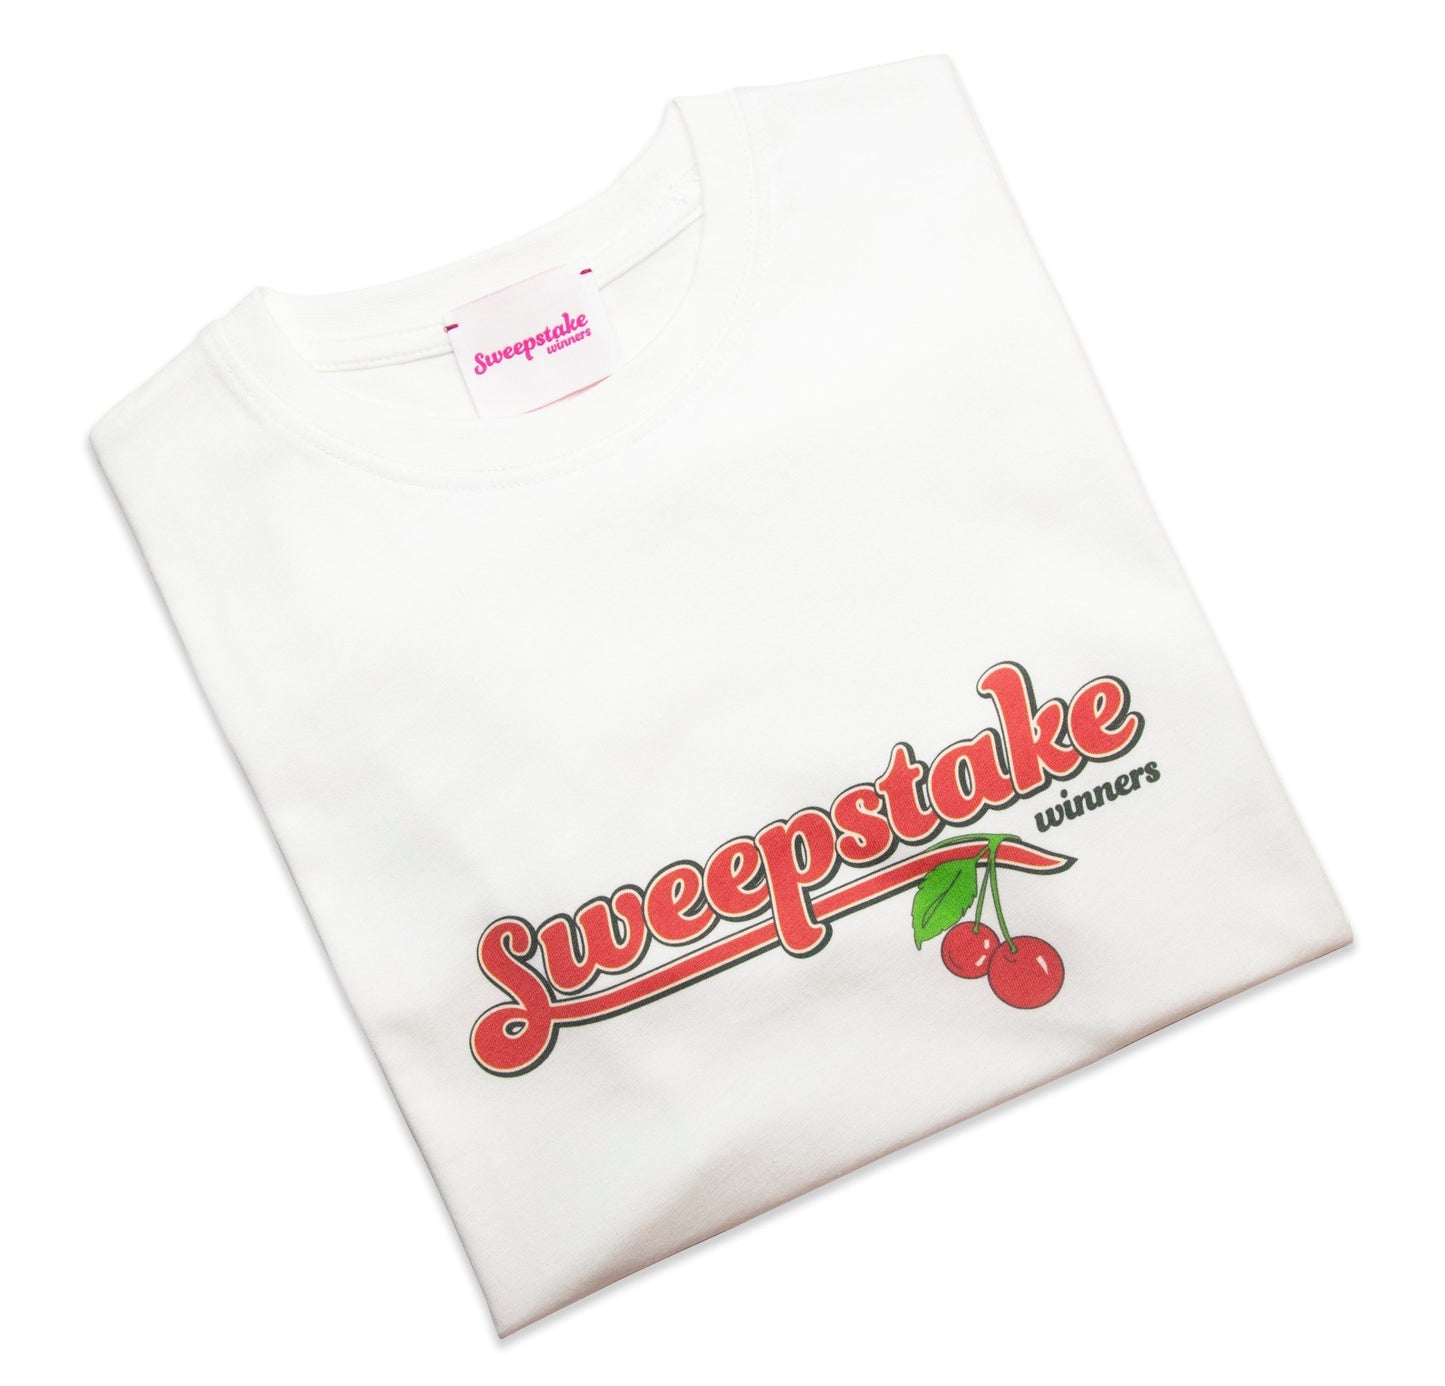 Cherries Logo Tee (White) - Sweepstake Winners™